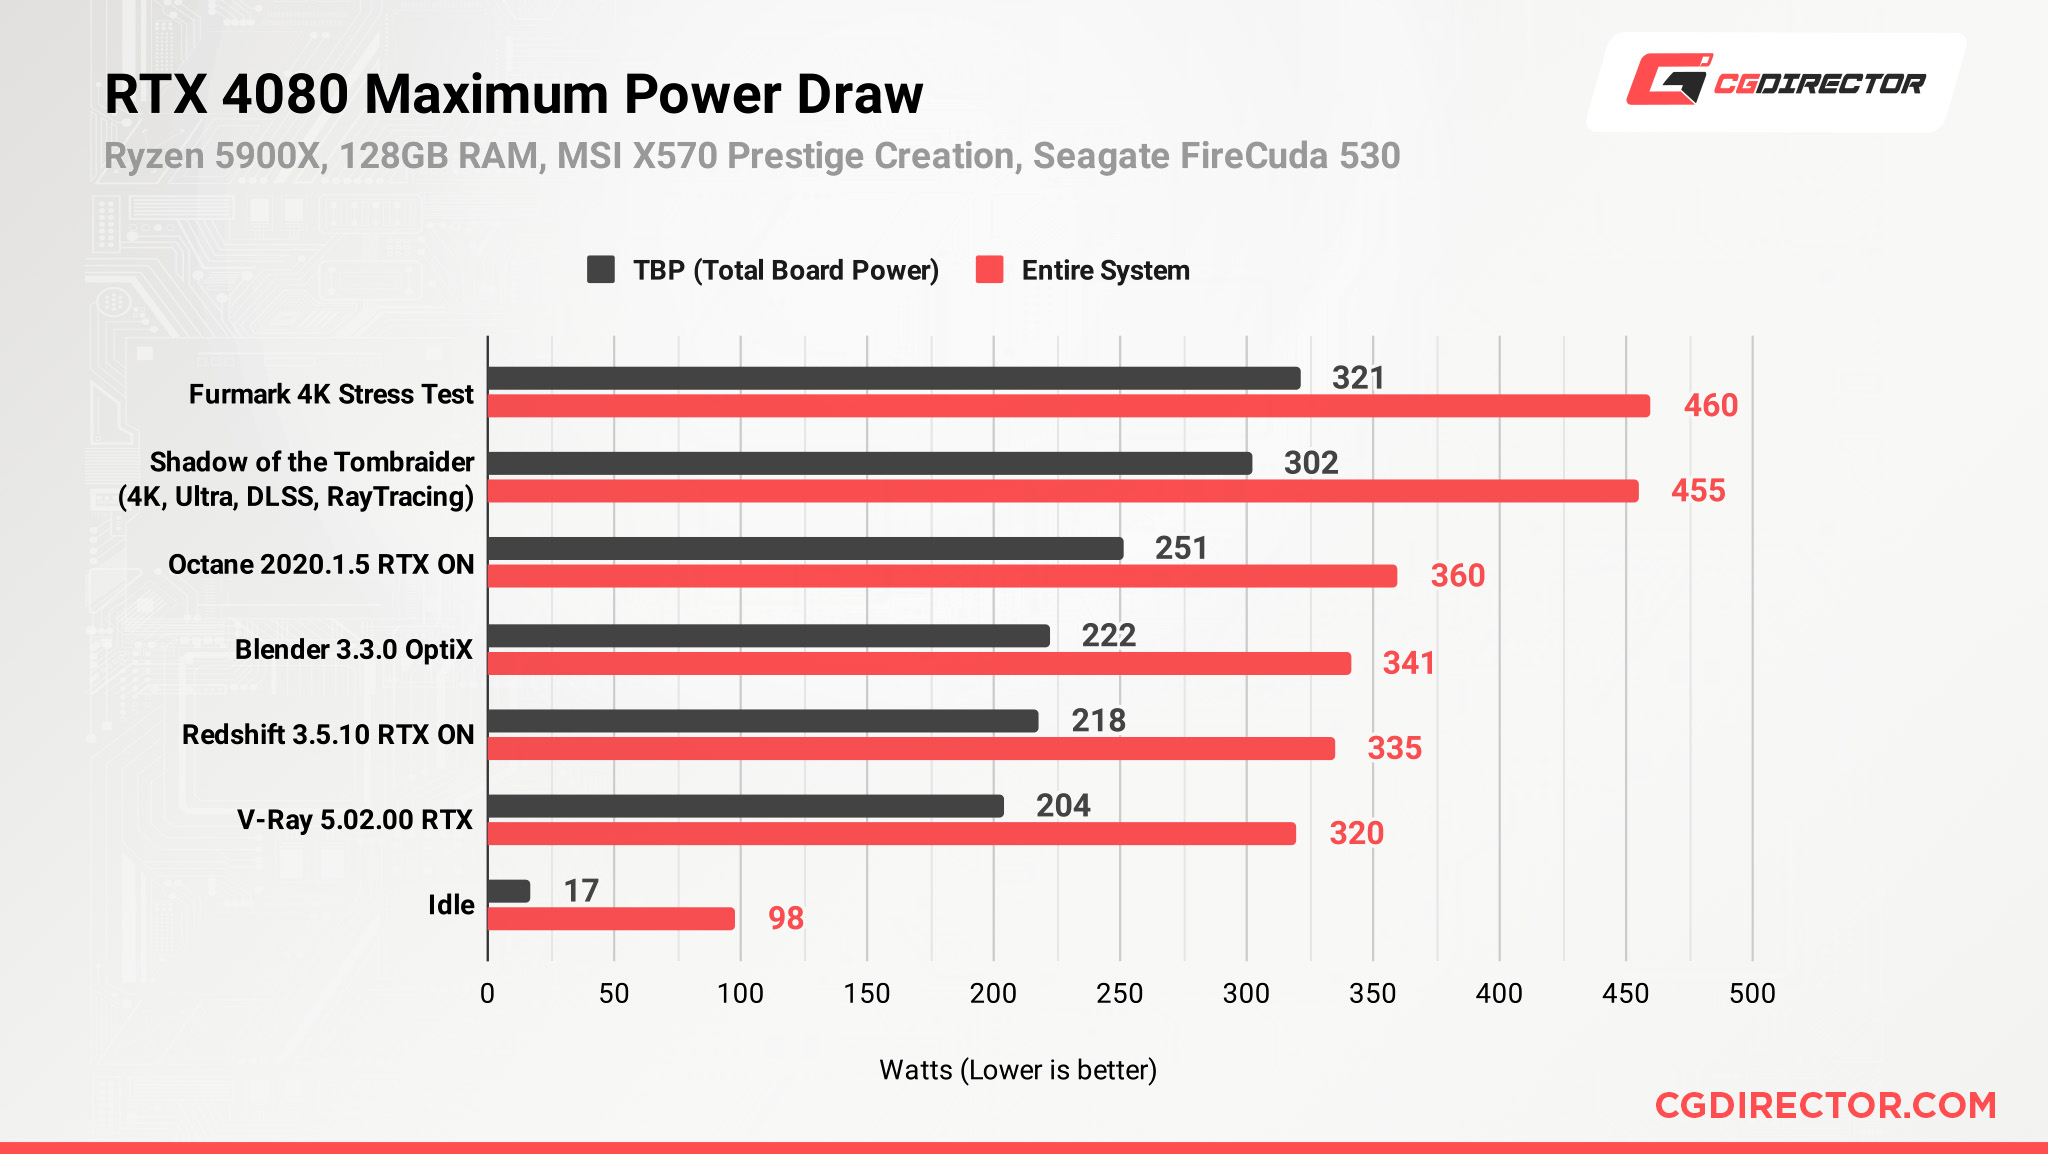 RTX 4080 Maximum Power Draw - Workloads compared